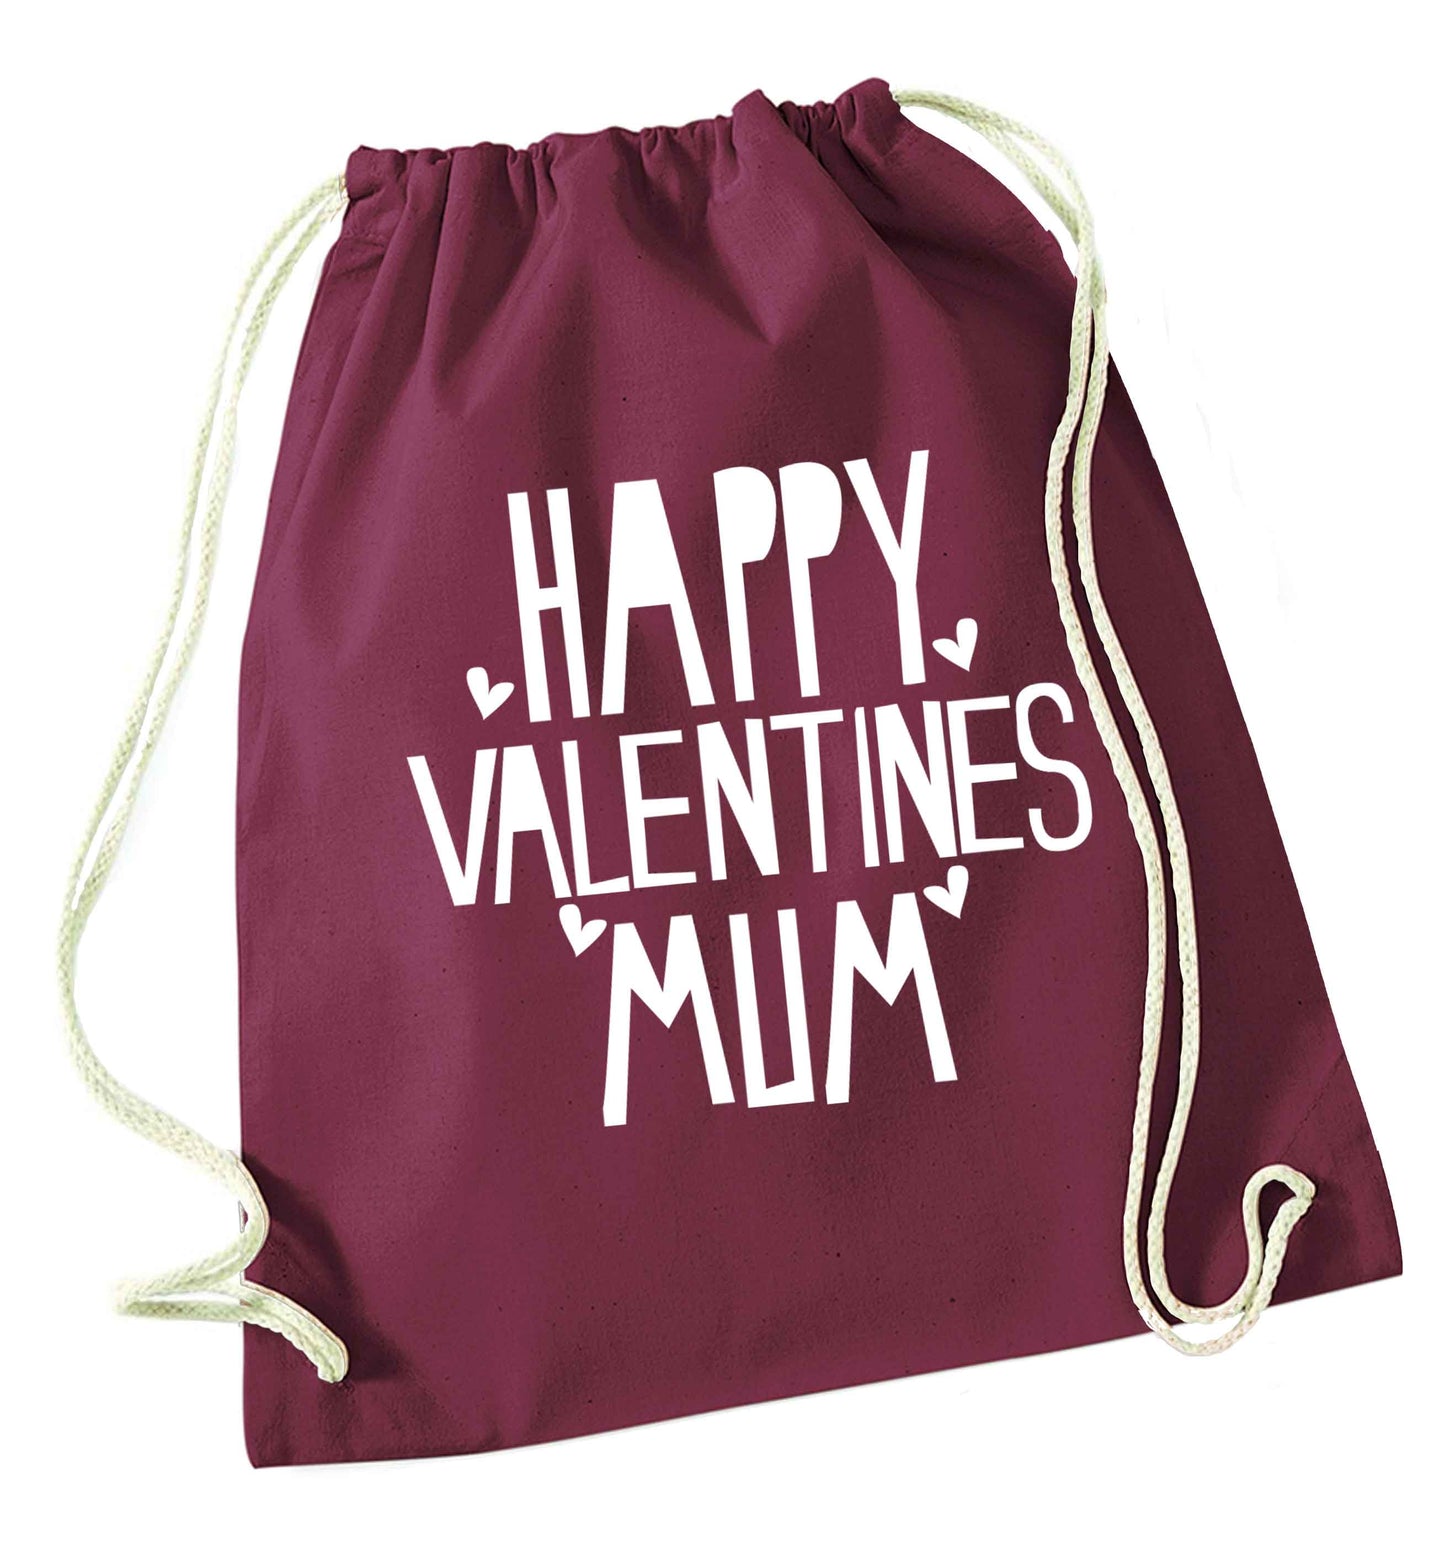 Happy valentines mum maroon drawstring bag